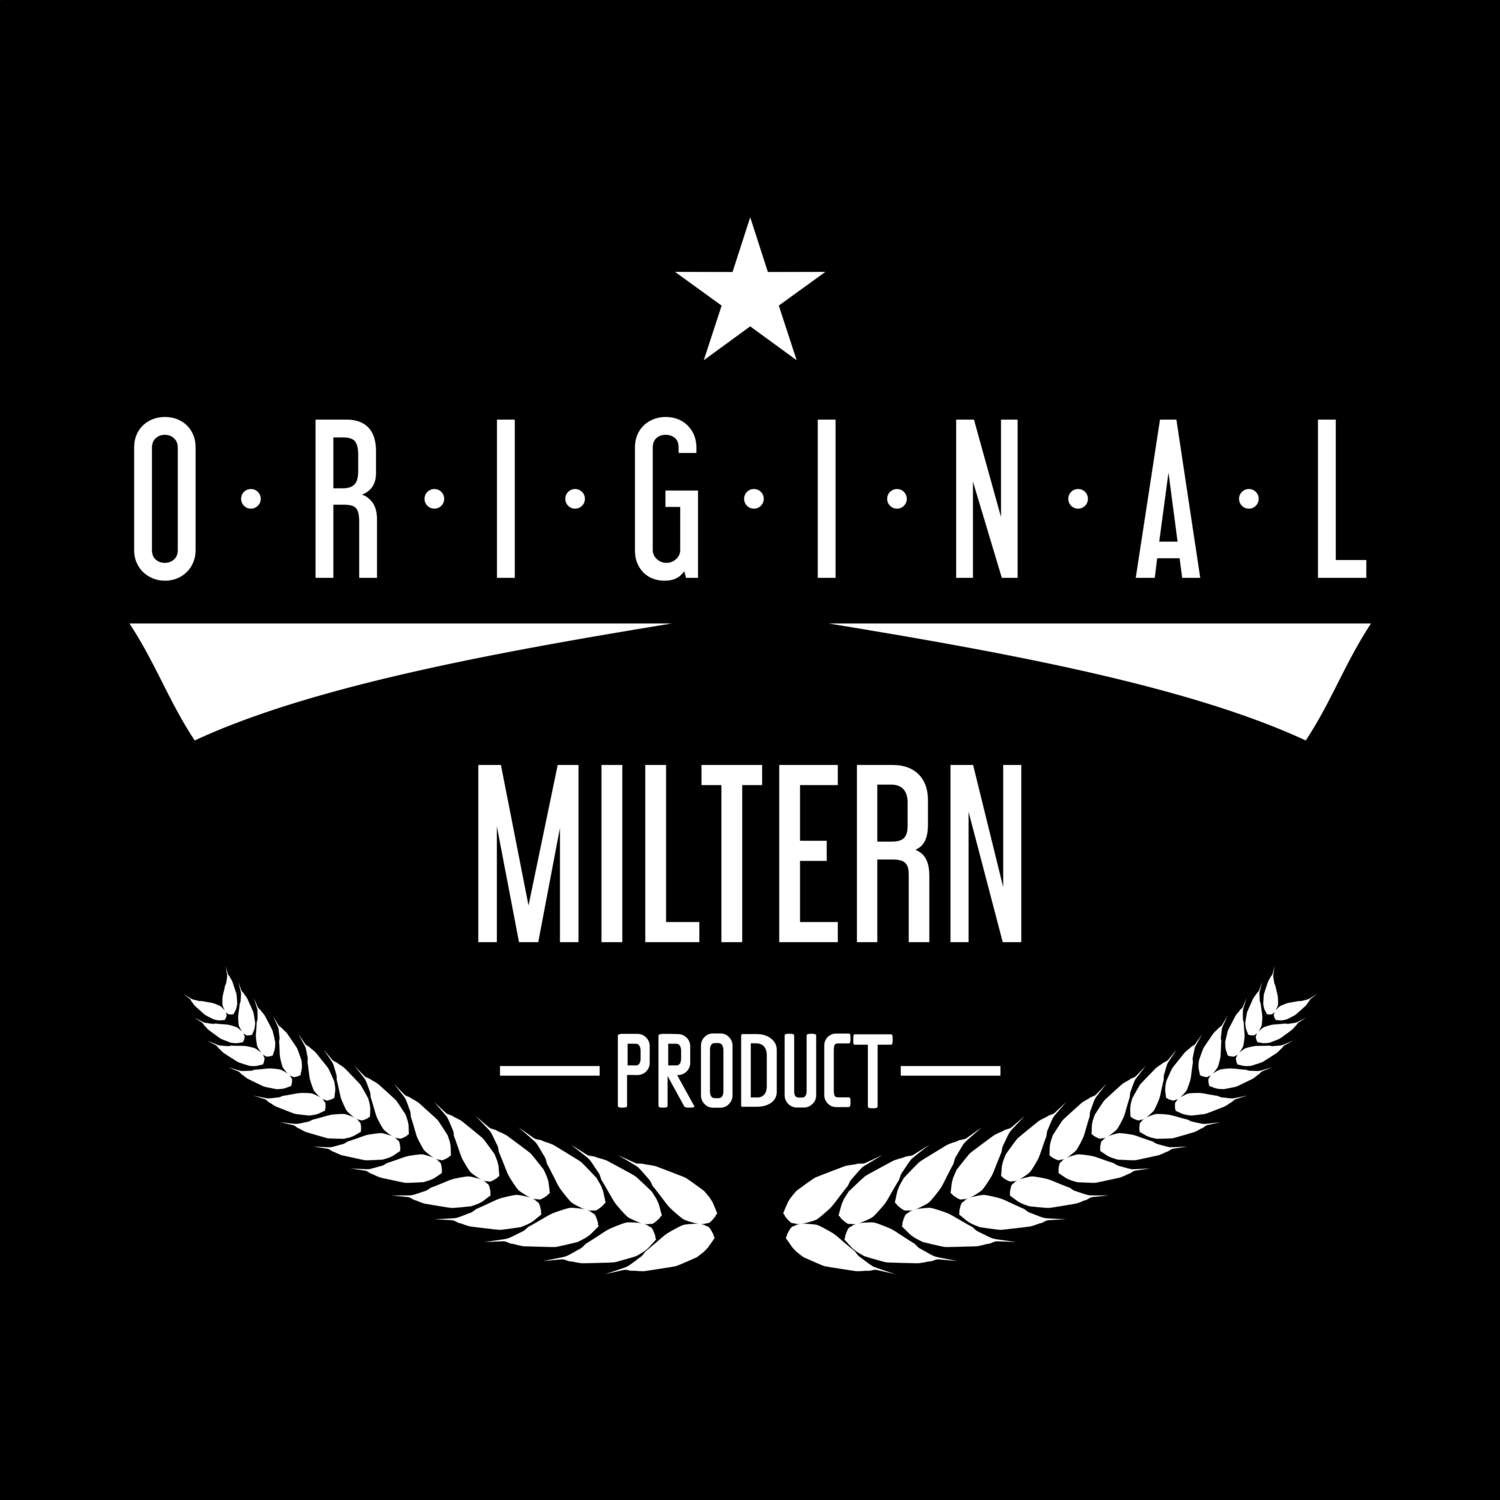 Miltern T-Shirt »Original Product«